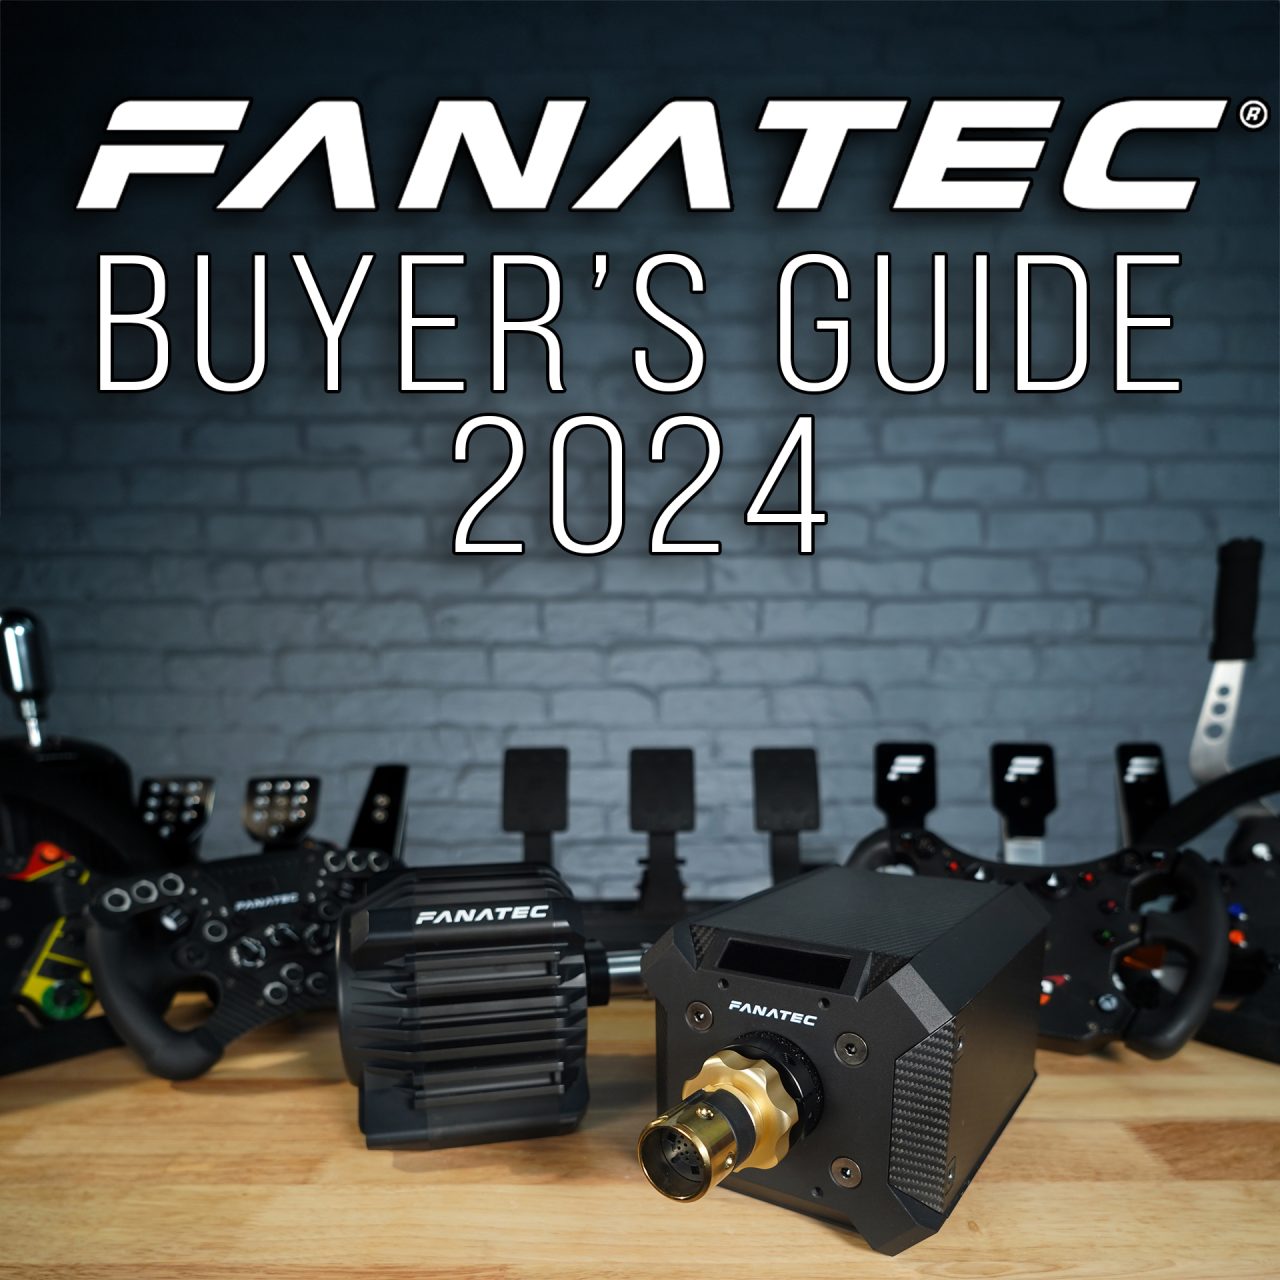 Fanatec Buyer's Guide